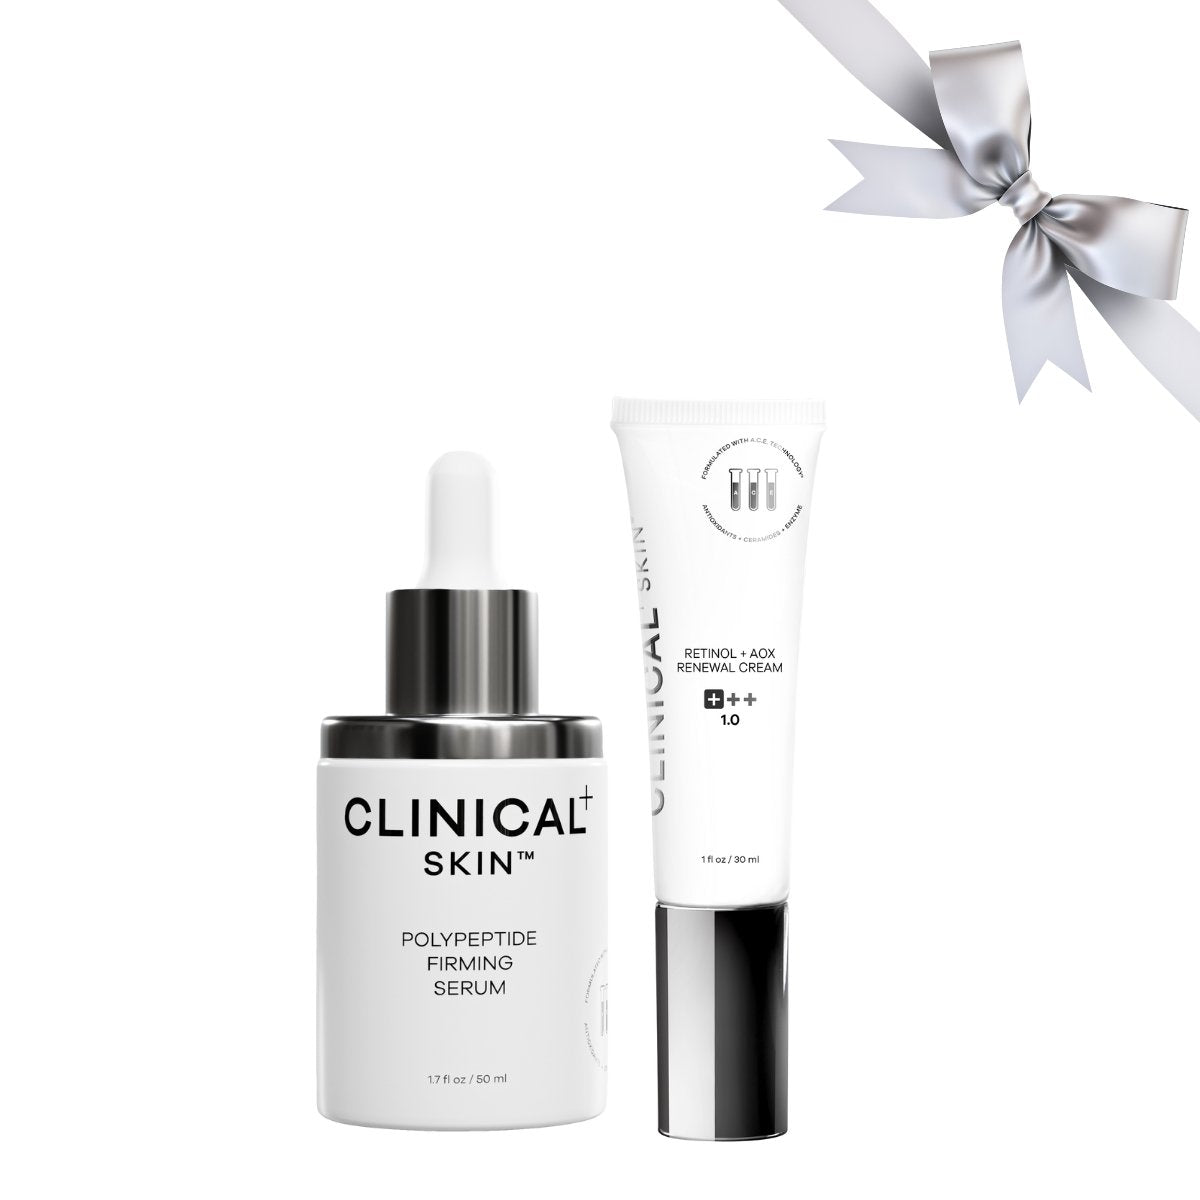 Clinical Skin Advanced Skin Renewal and Firming Duo - SkincareEssentials